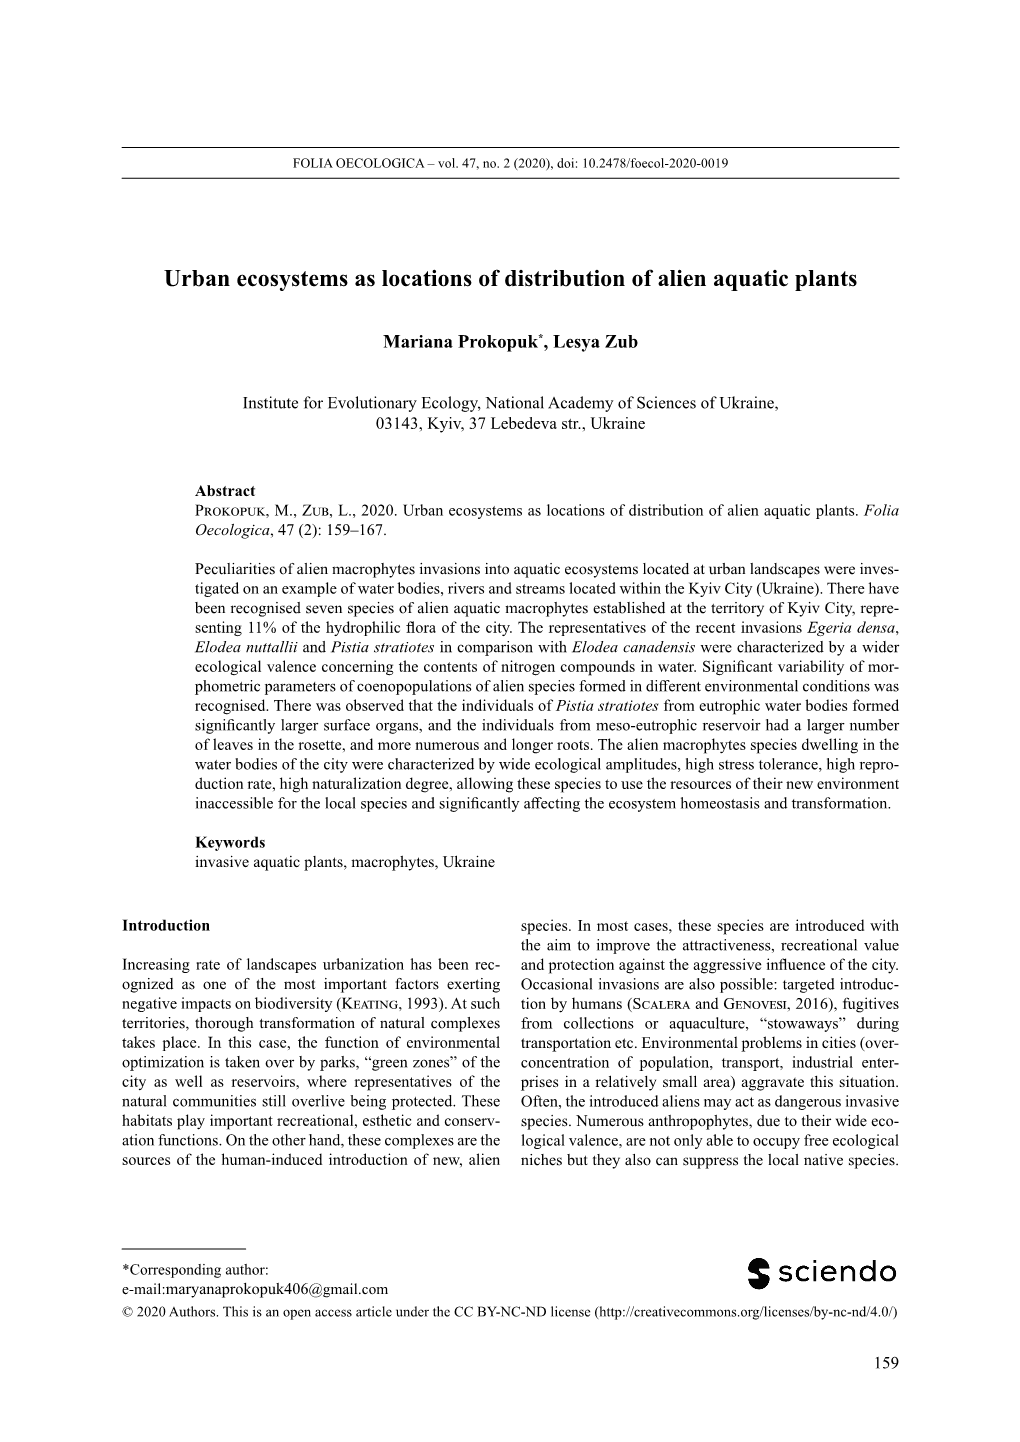 Urban Ecosystems As Locations of Distribution of Alien Aquatic Plants